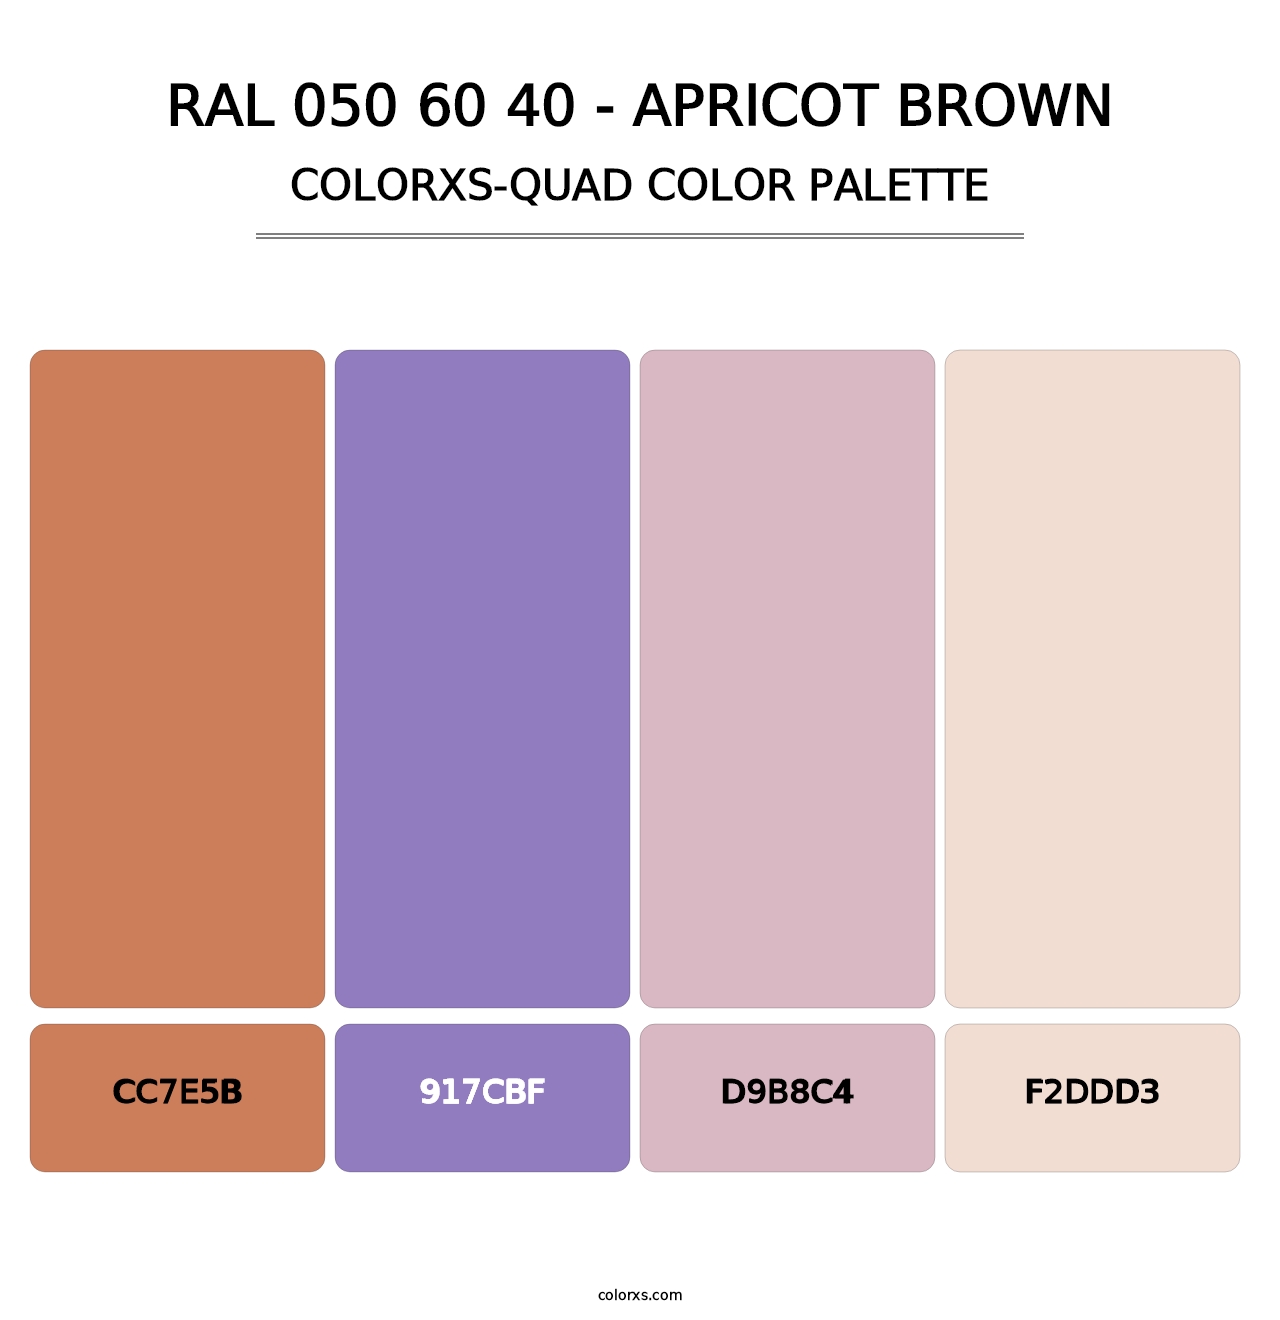 RAL 050 60 40 - Apricot Brown - Colorxs Quad Palette